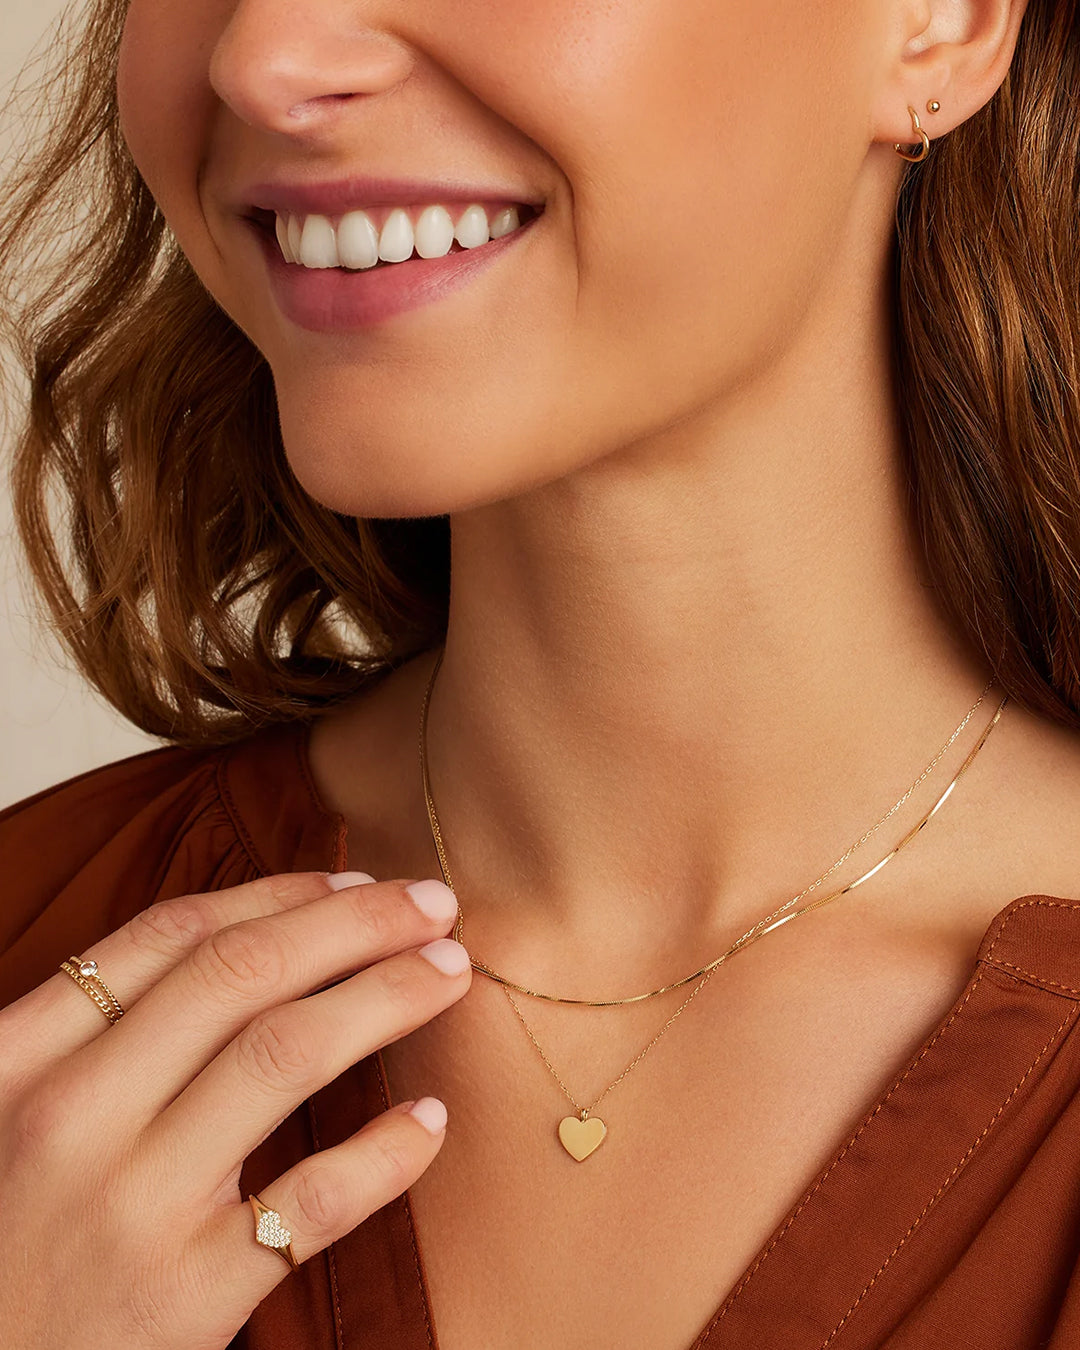 Classic Pink Sapphire Necklace – gorjana